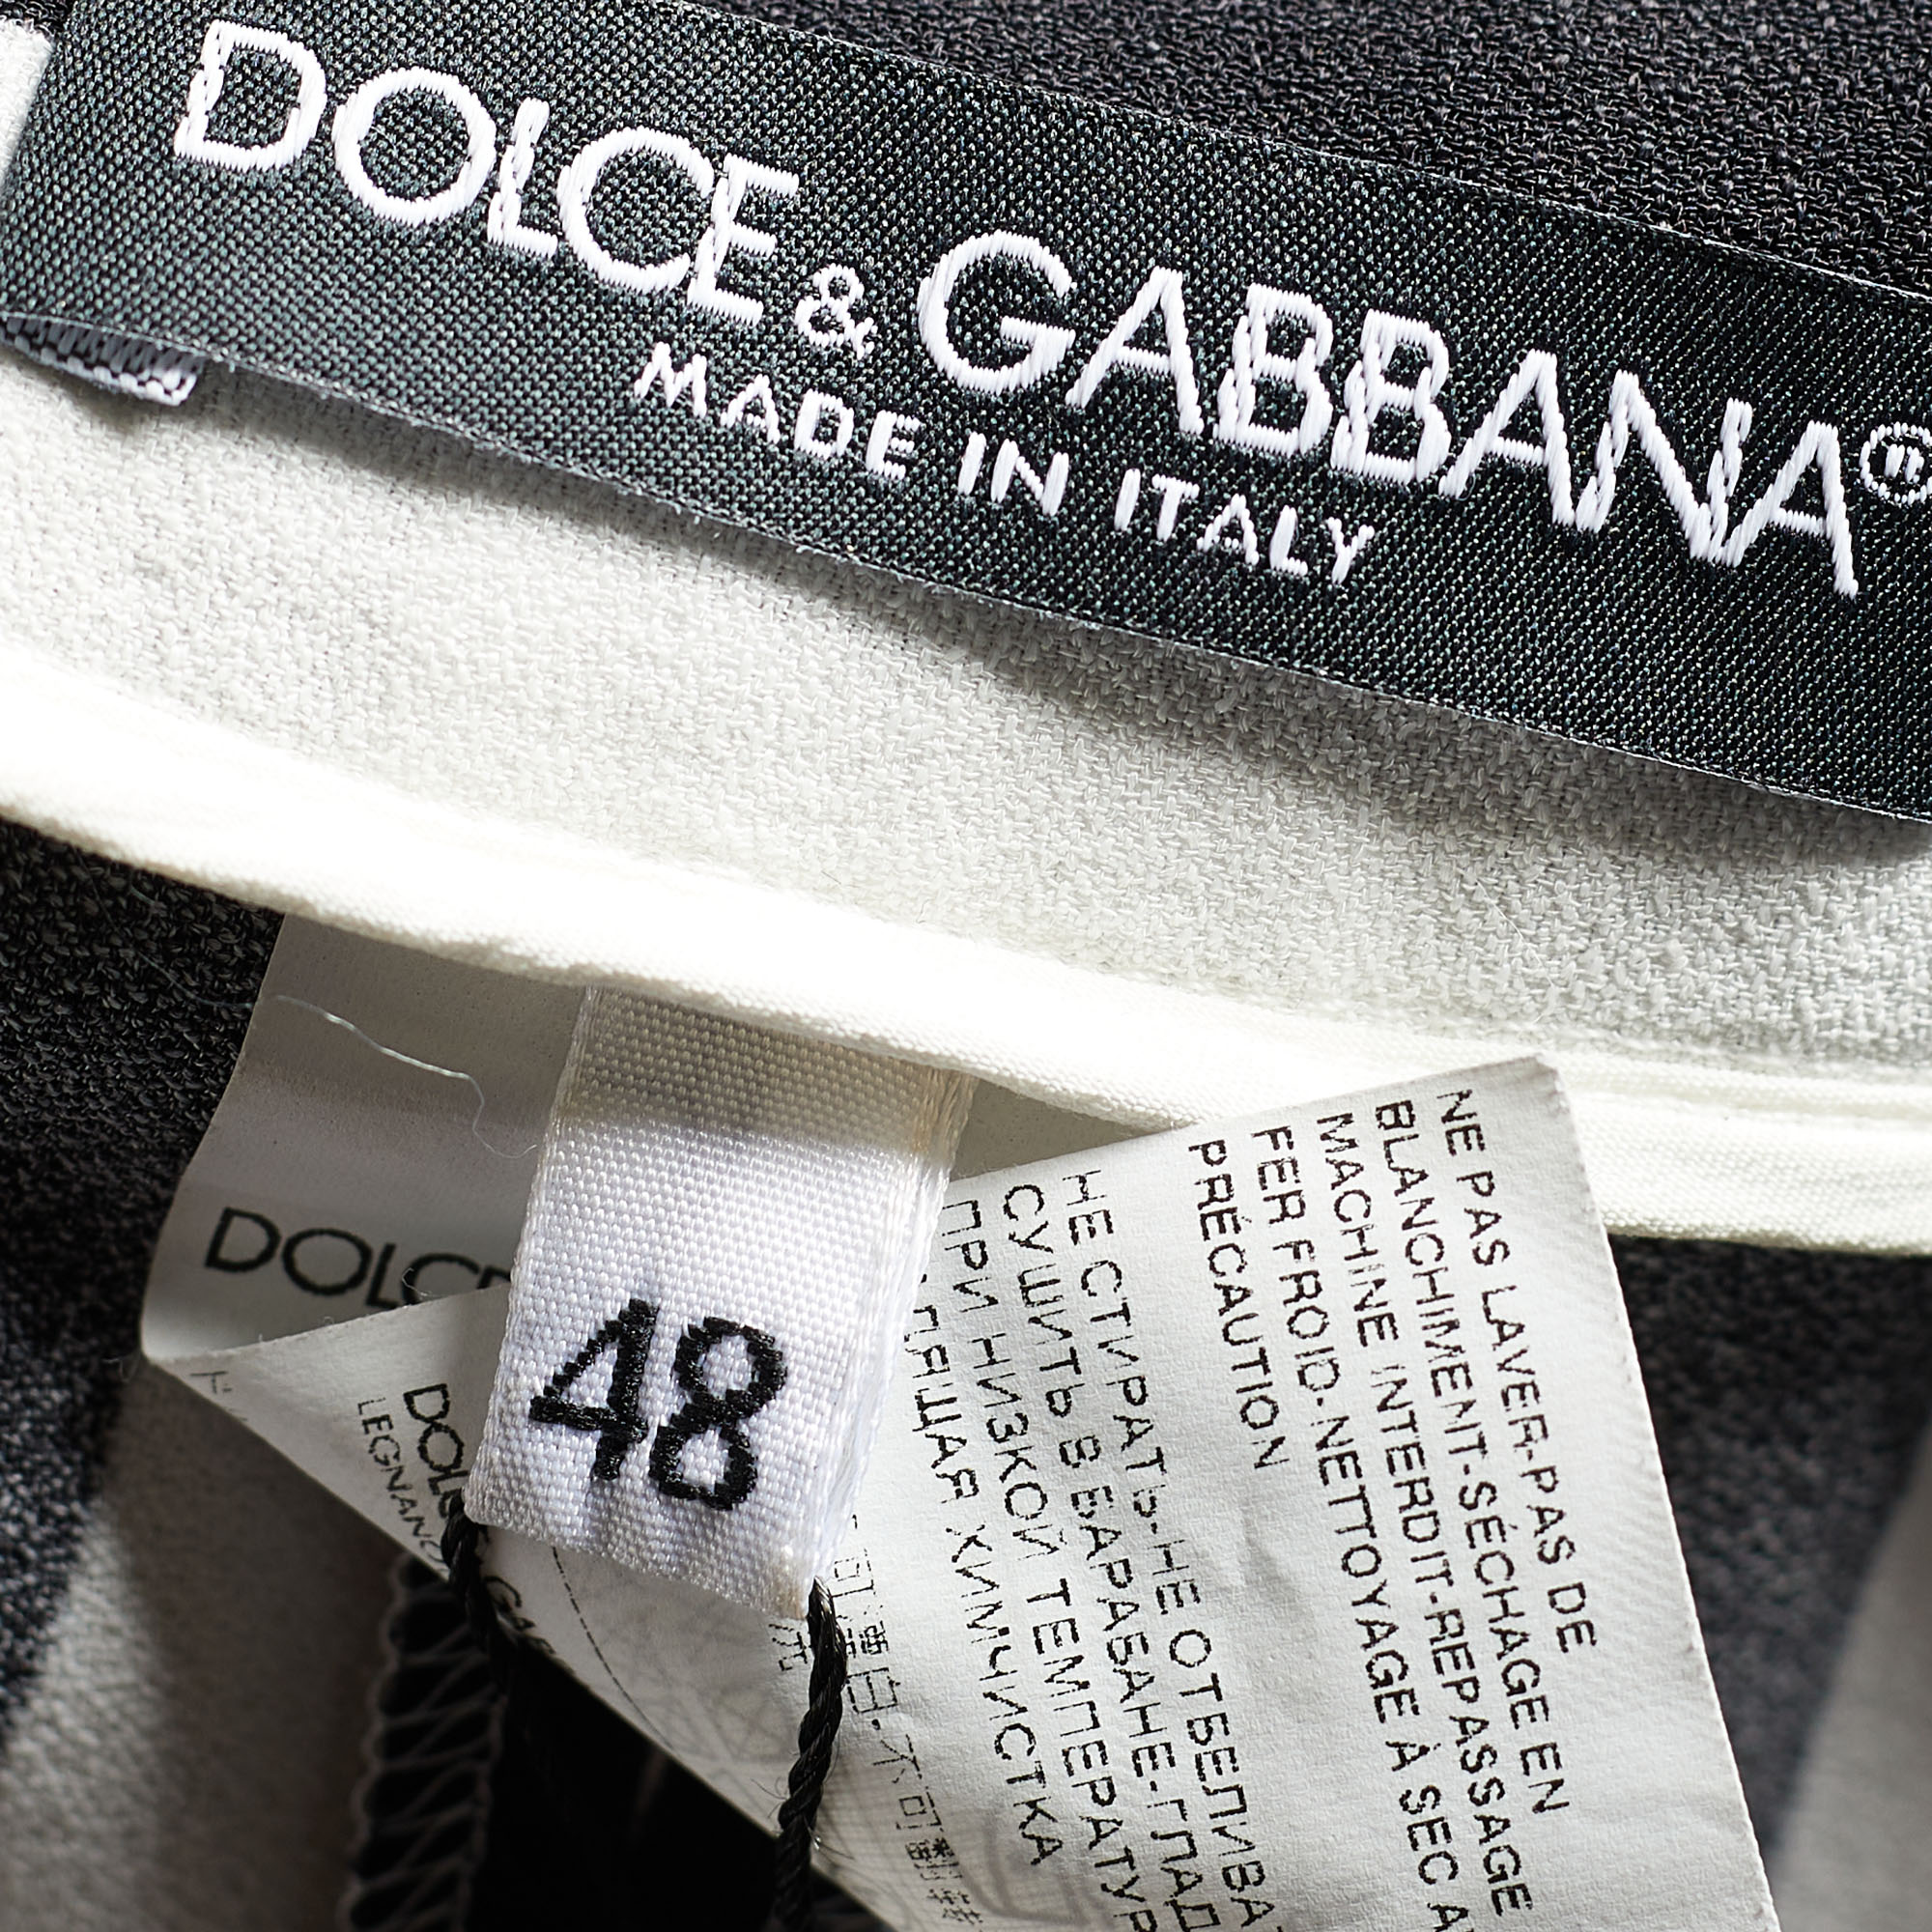 Dolce & Gabbana Monochrome Striped Crepe Tapered Trousers L